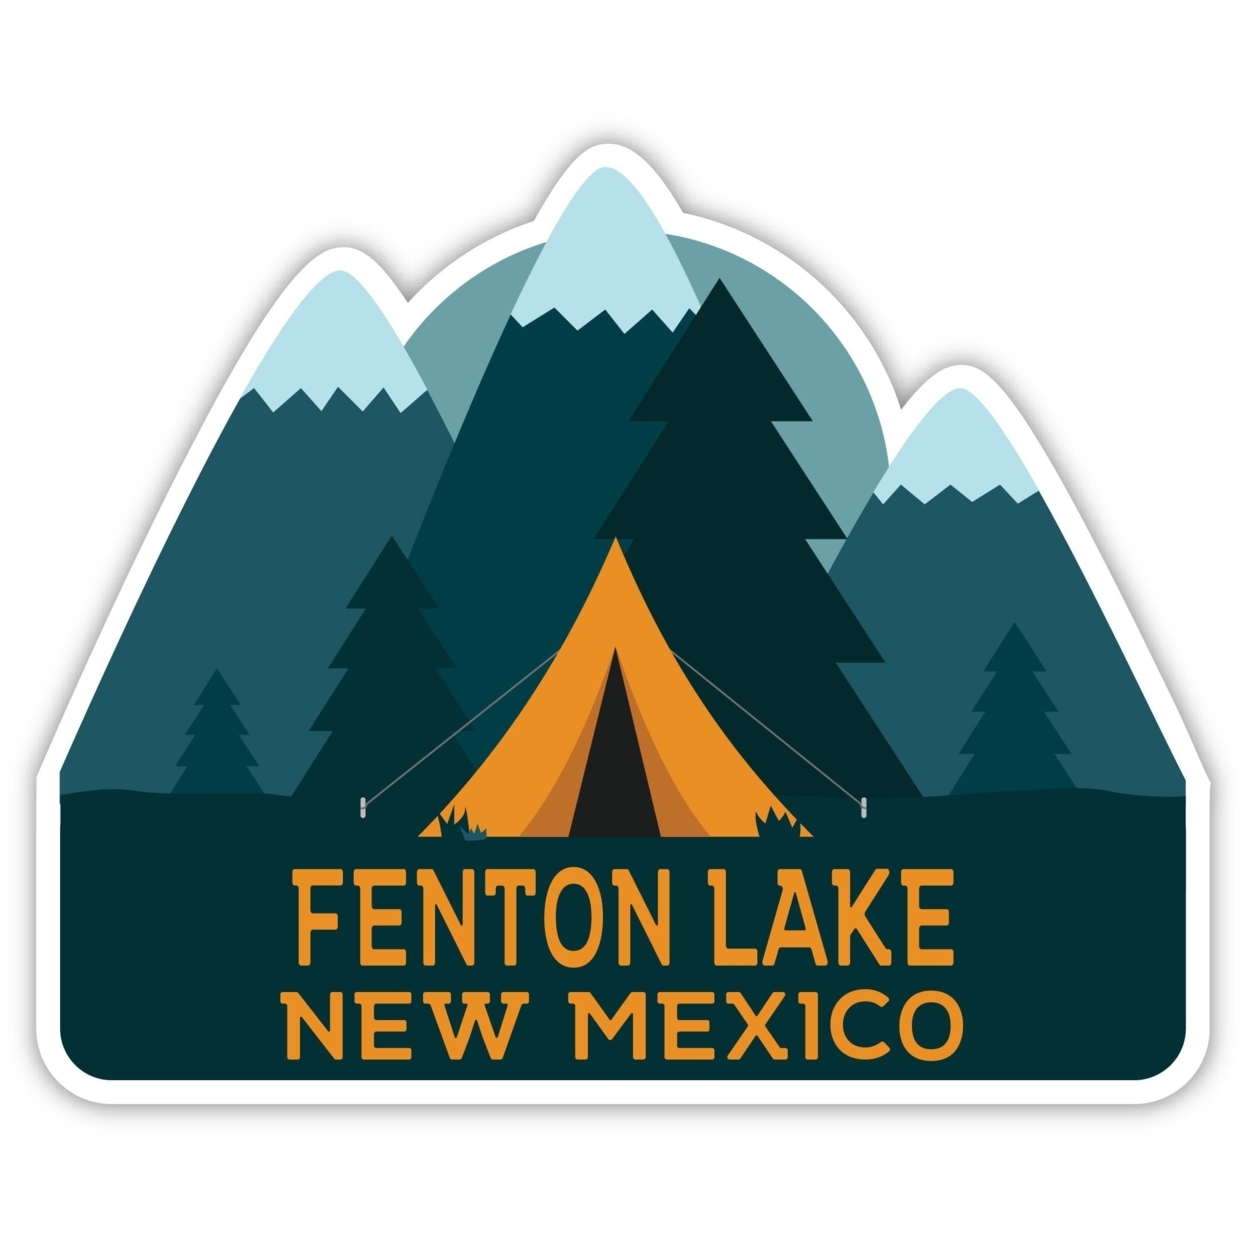 Fenton Lake New Mexico Souvenir Decorative Stickers (Choose Theme And Size) - Single Unit, 4-Inch, Tent